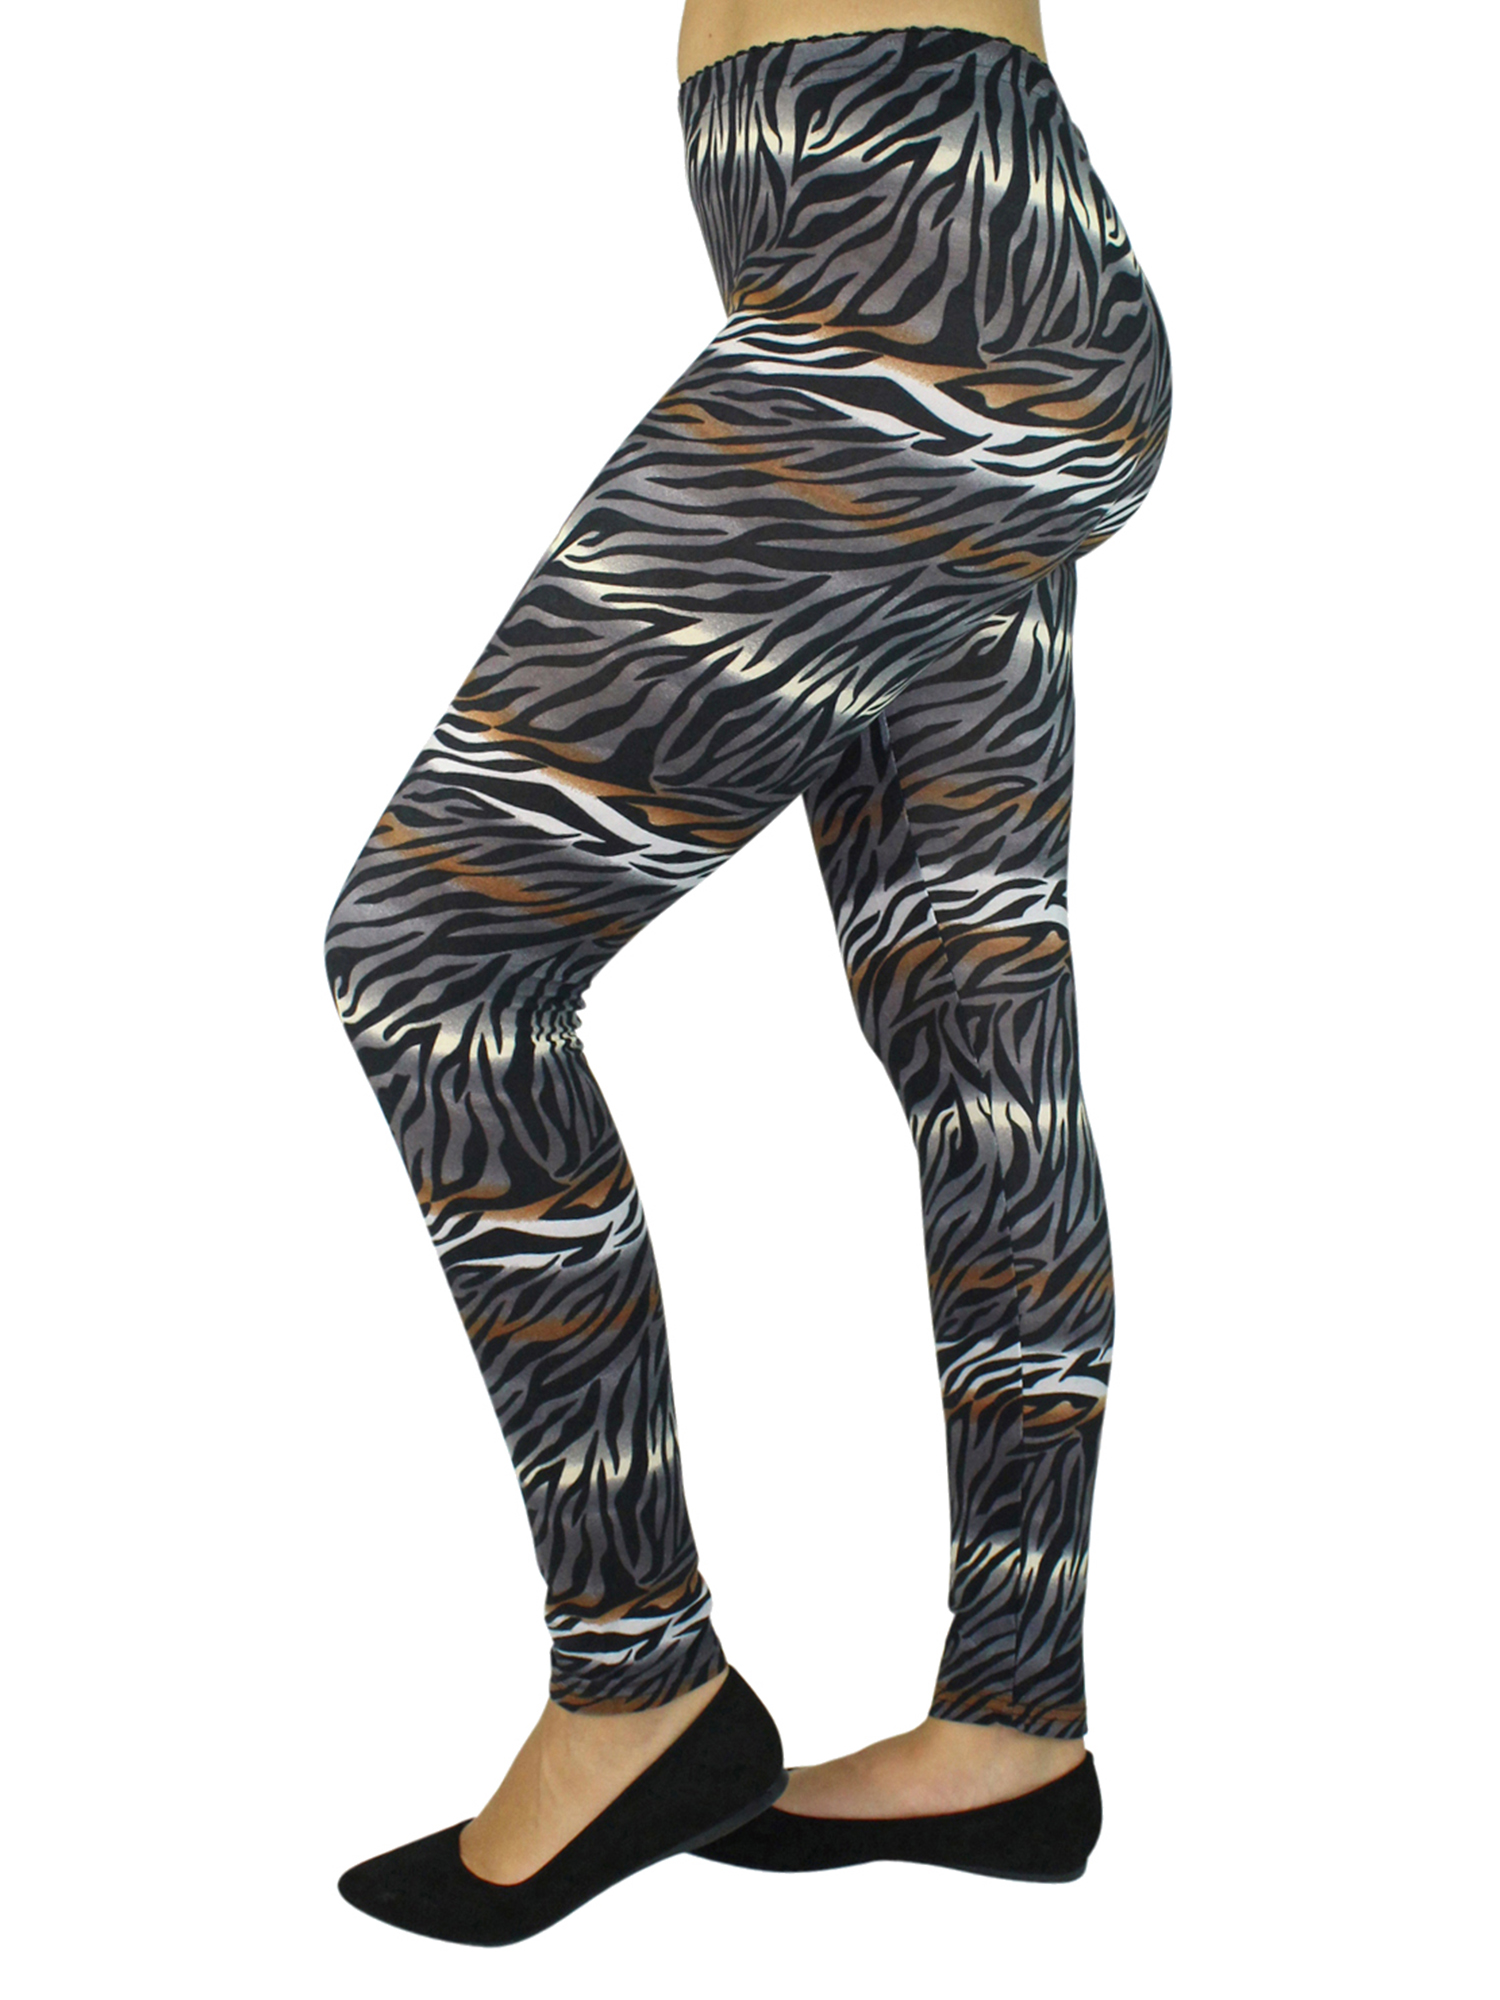 Brown & Black Tiger Animal Print Leggings Size Small/Medium - image 2 of 3